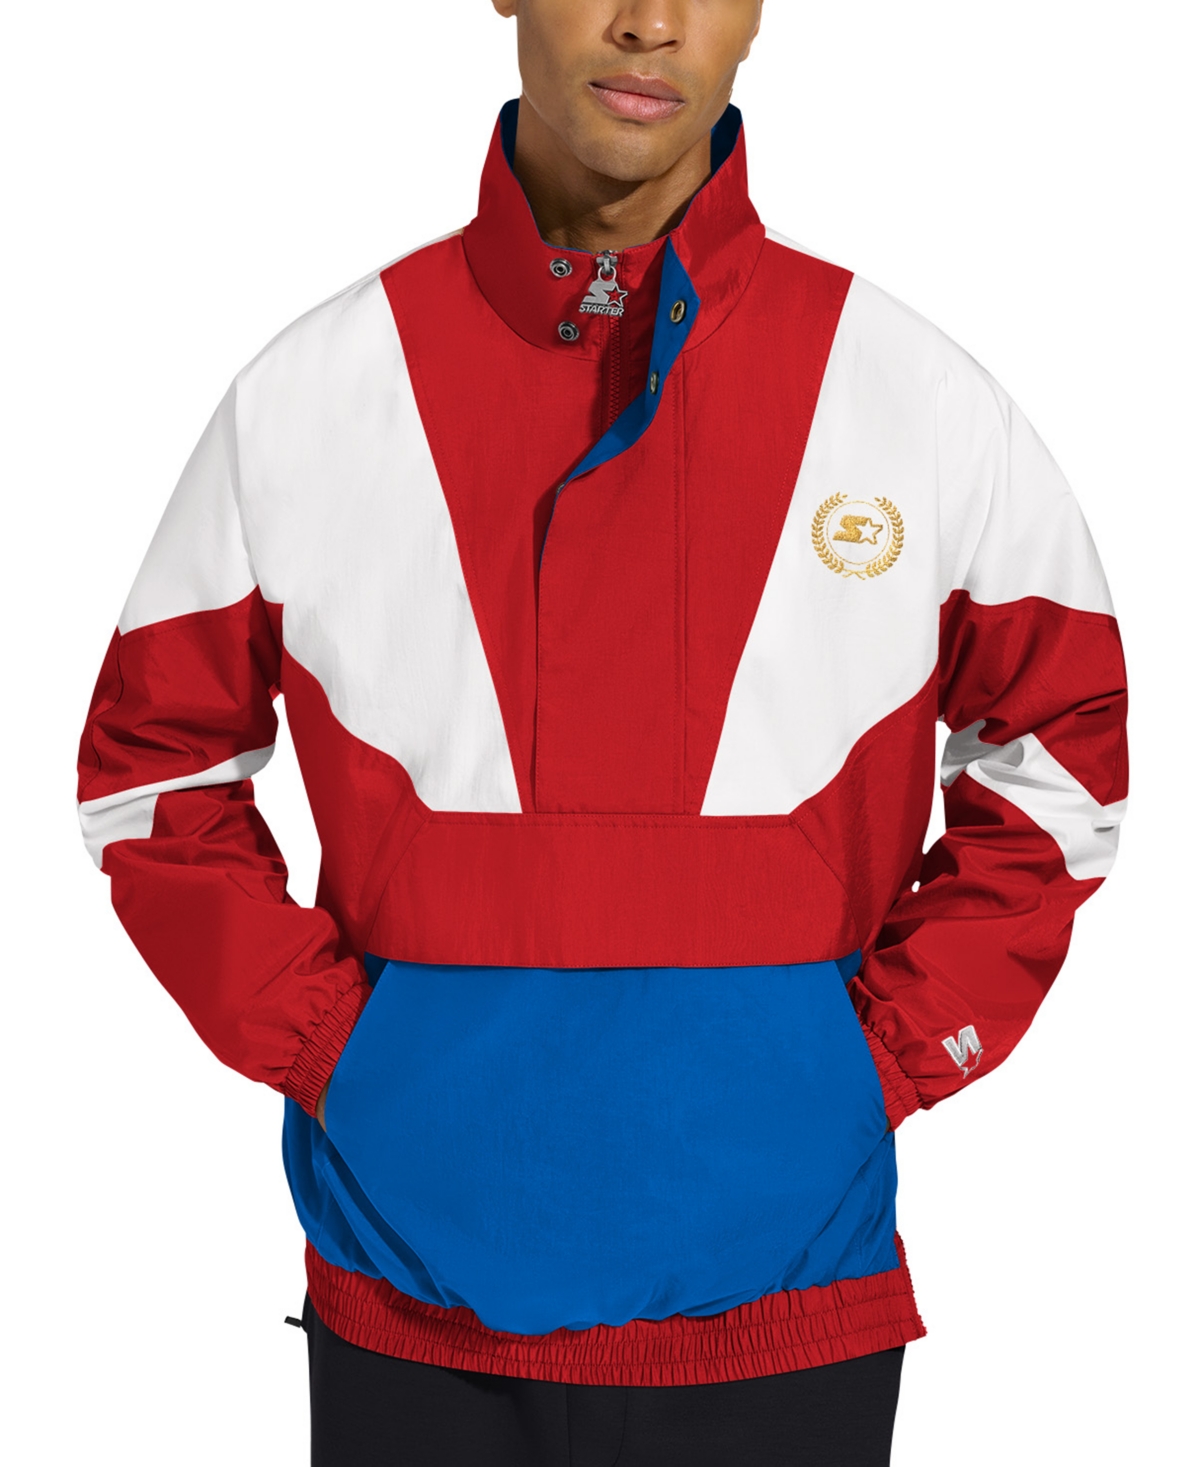 Men's Colorblocked Lightweight Jacket - Red/red